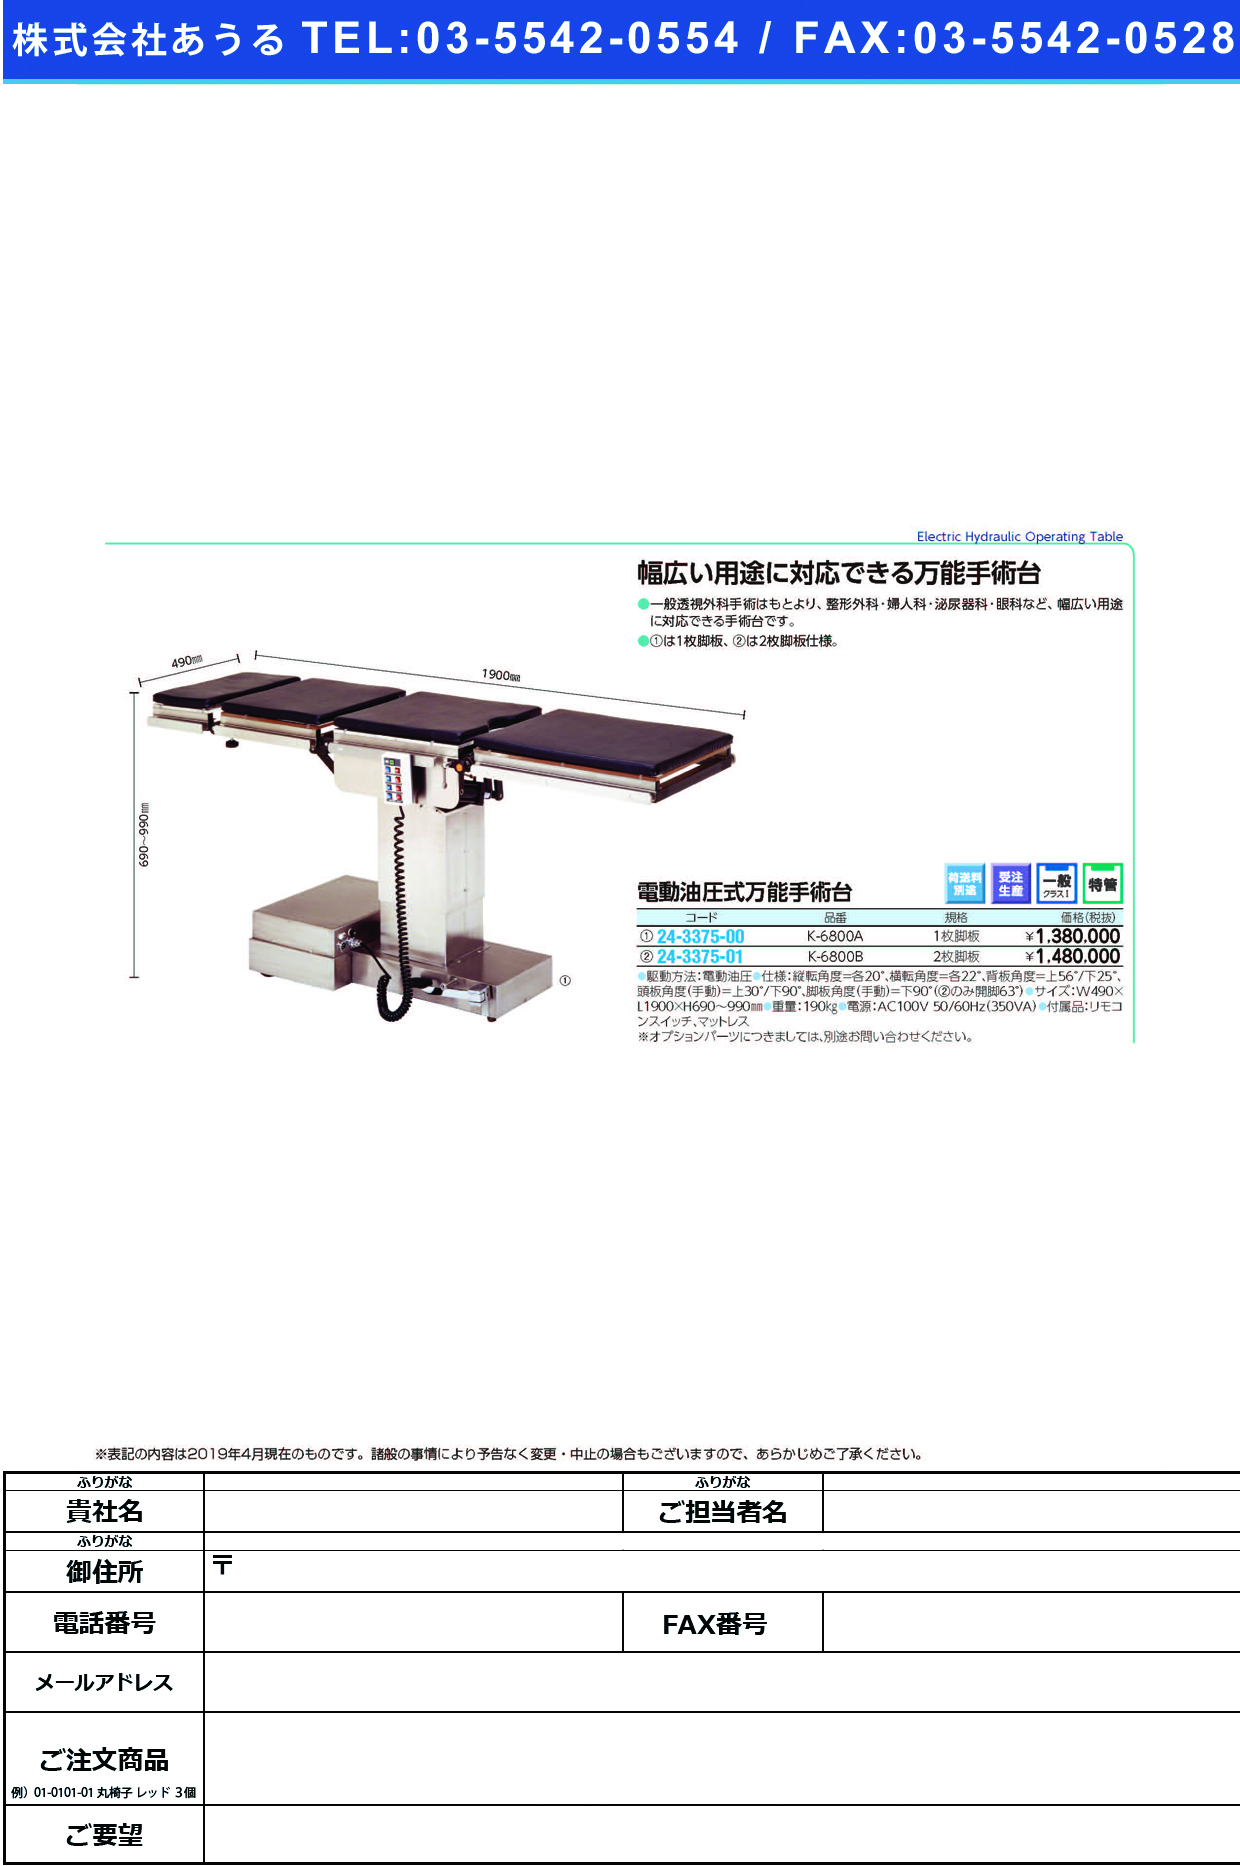 (24-3375-01)外科用手術台 K-6800B ｹﾞｶﾖｳｼｭｼﾞｭﾂﾀﾞｲ【1台単位】【2019年カタログ商品】